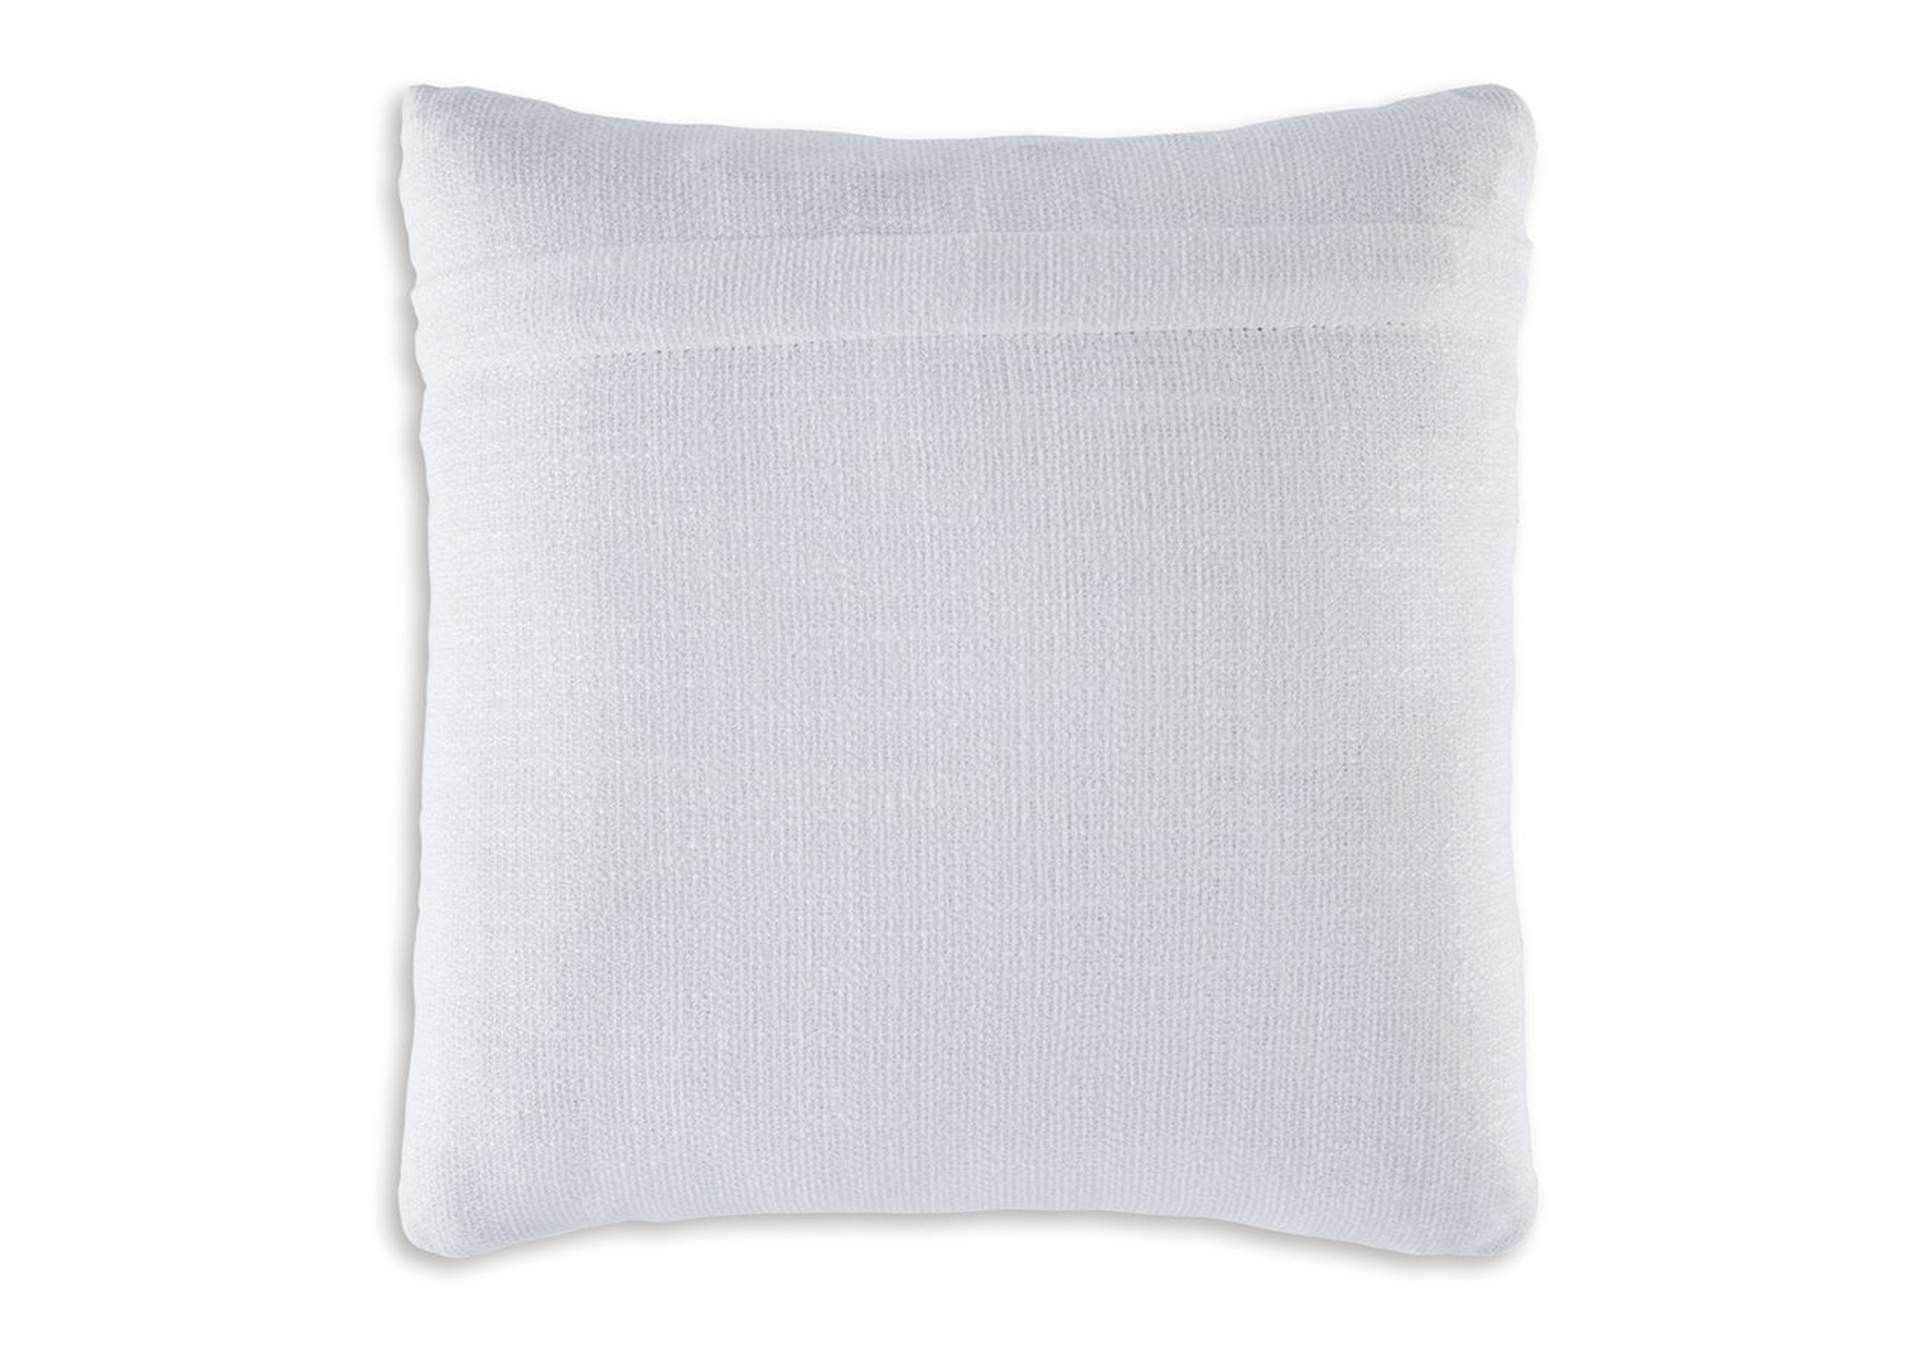 Jaycott Next-Gen Nuvella Pillow,Signature Design By Ashley